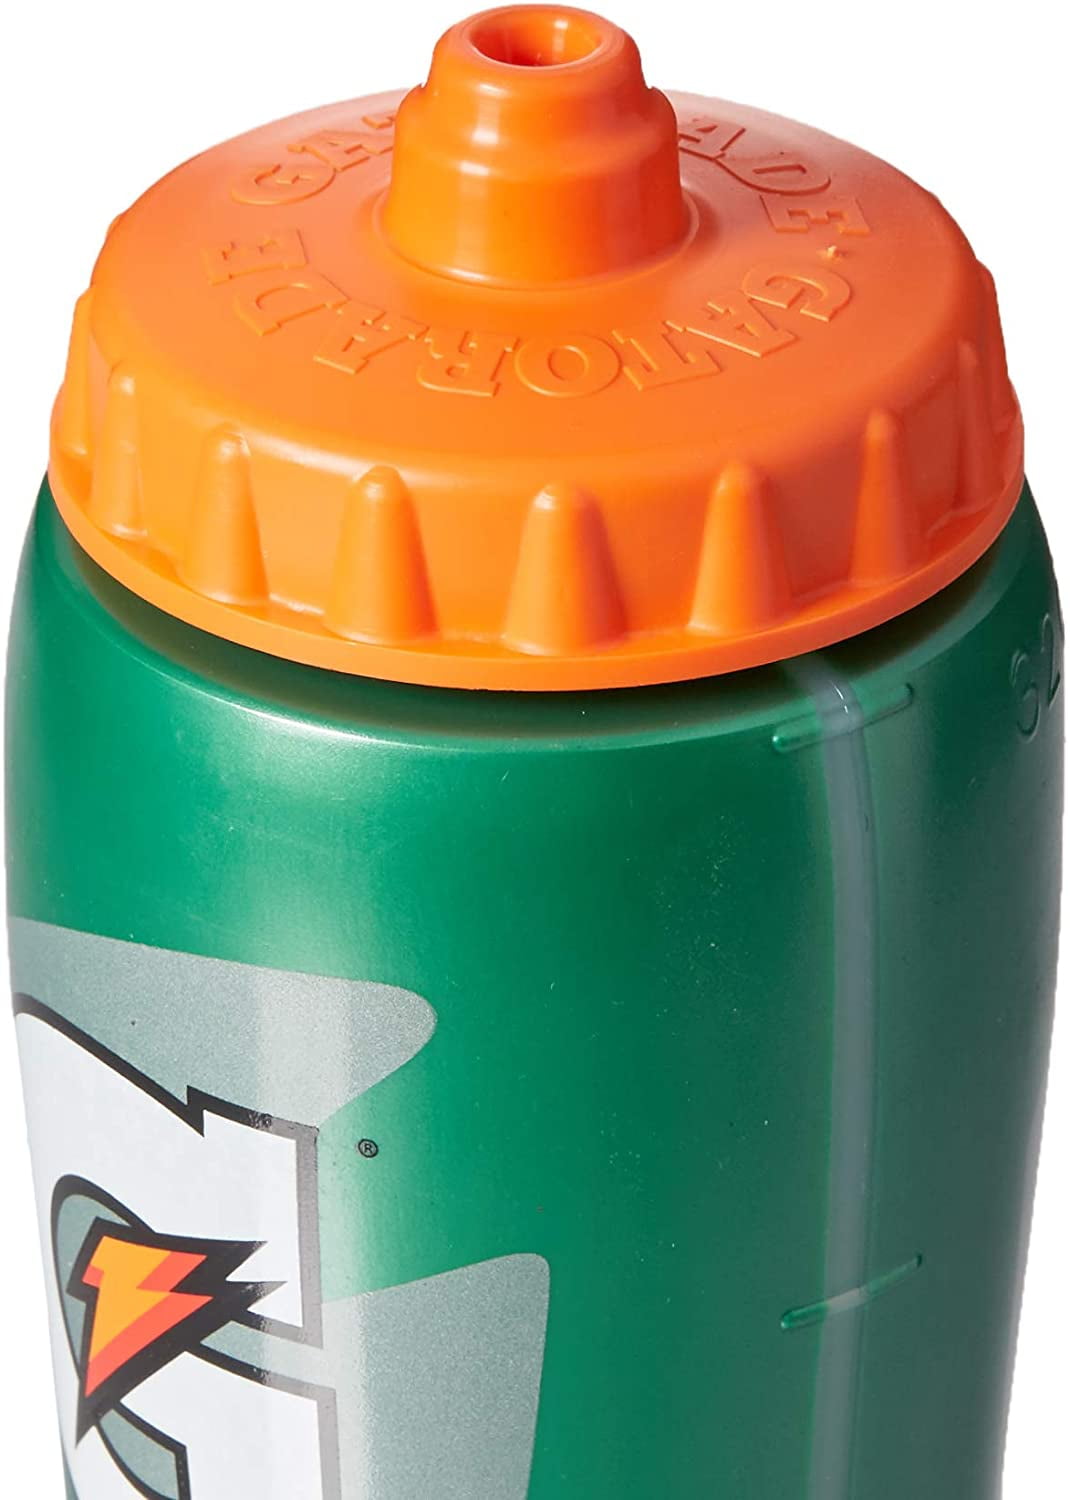 Gatorade Squeeze 32 oz Green Plastic Sports Water Bottle Orange